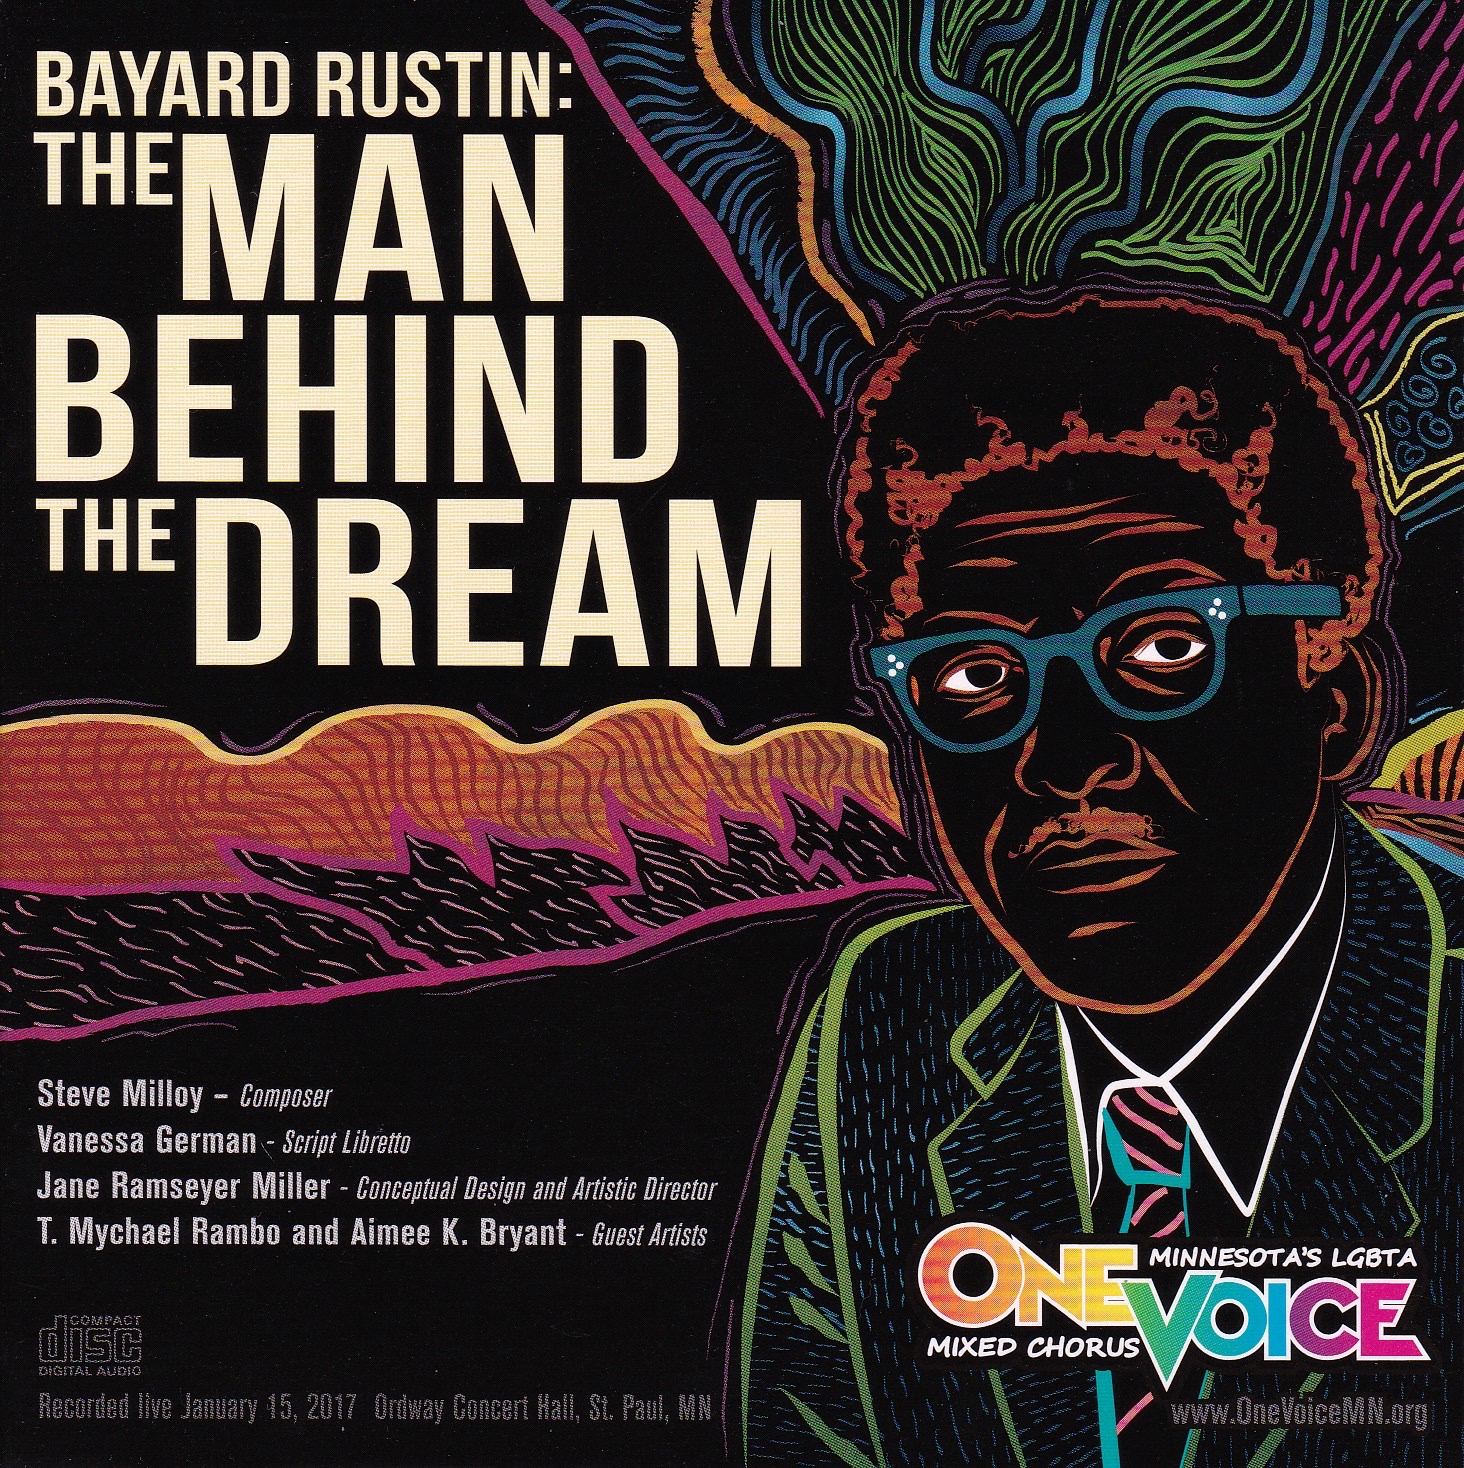 Bayard Rustin: The Man Behind the Dream